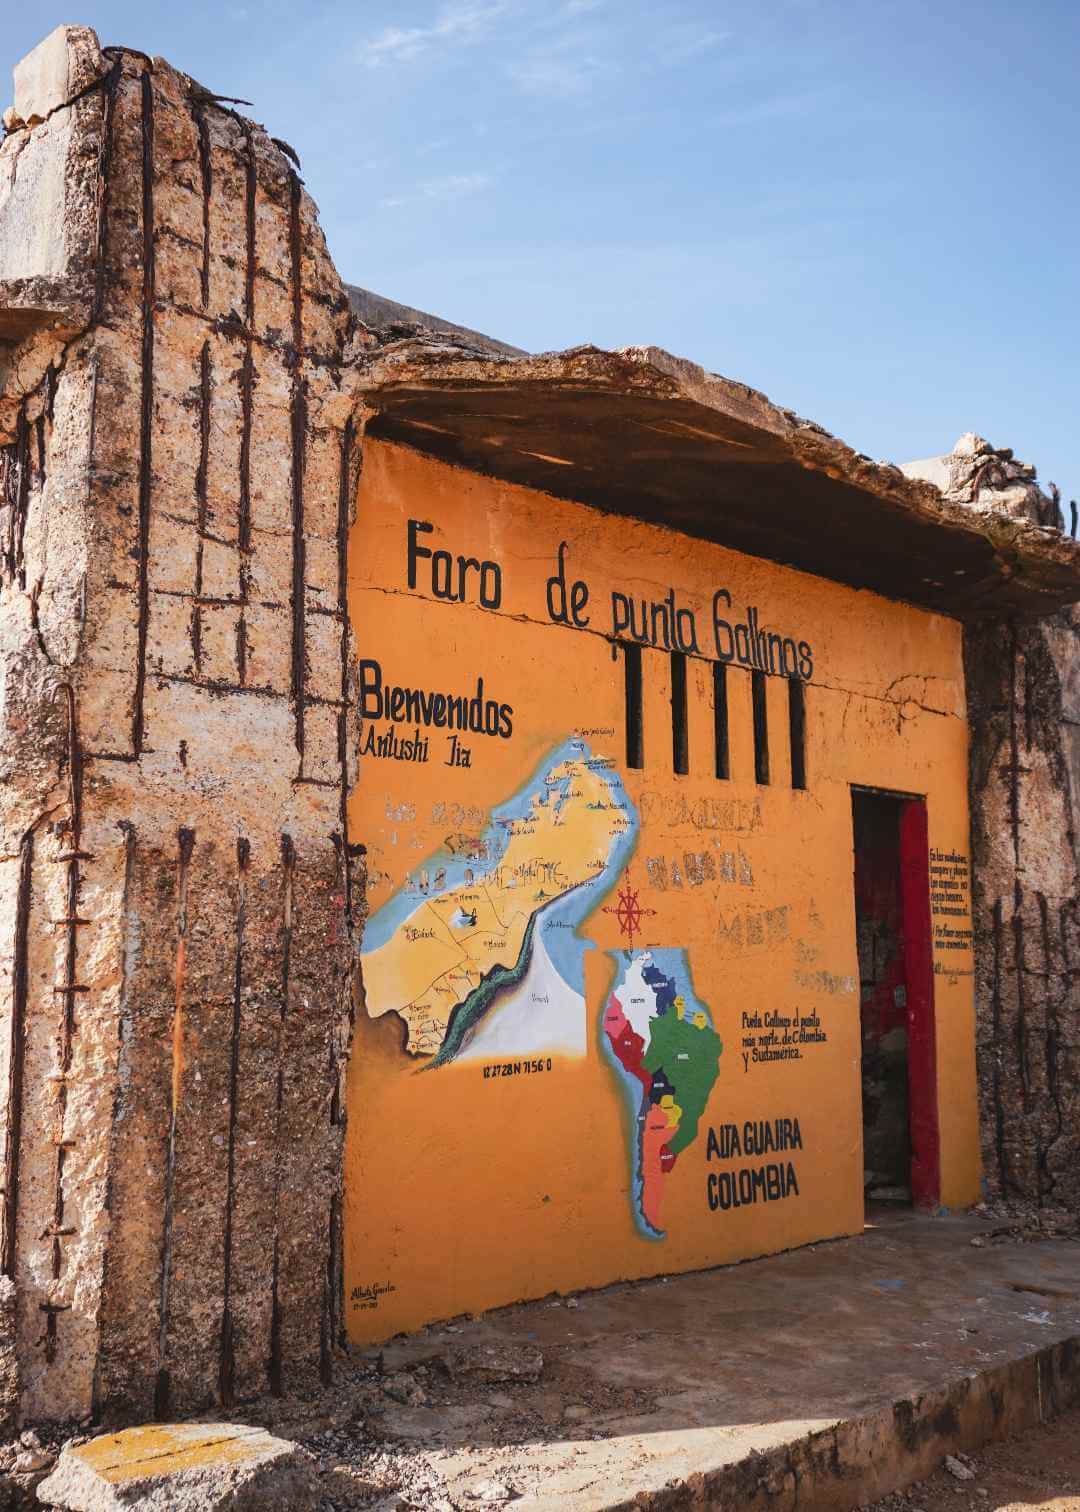 Faro de Punta Gallinas